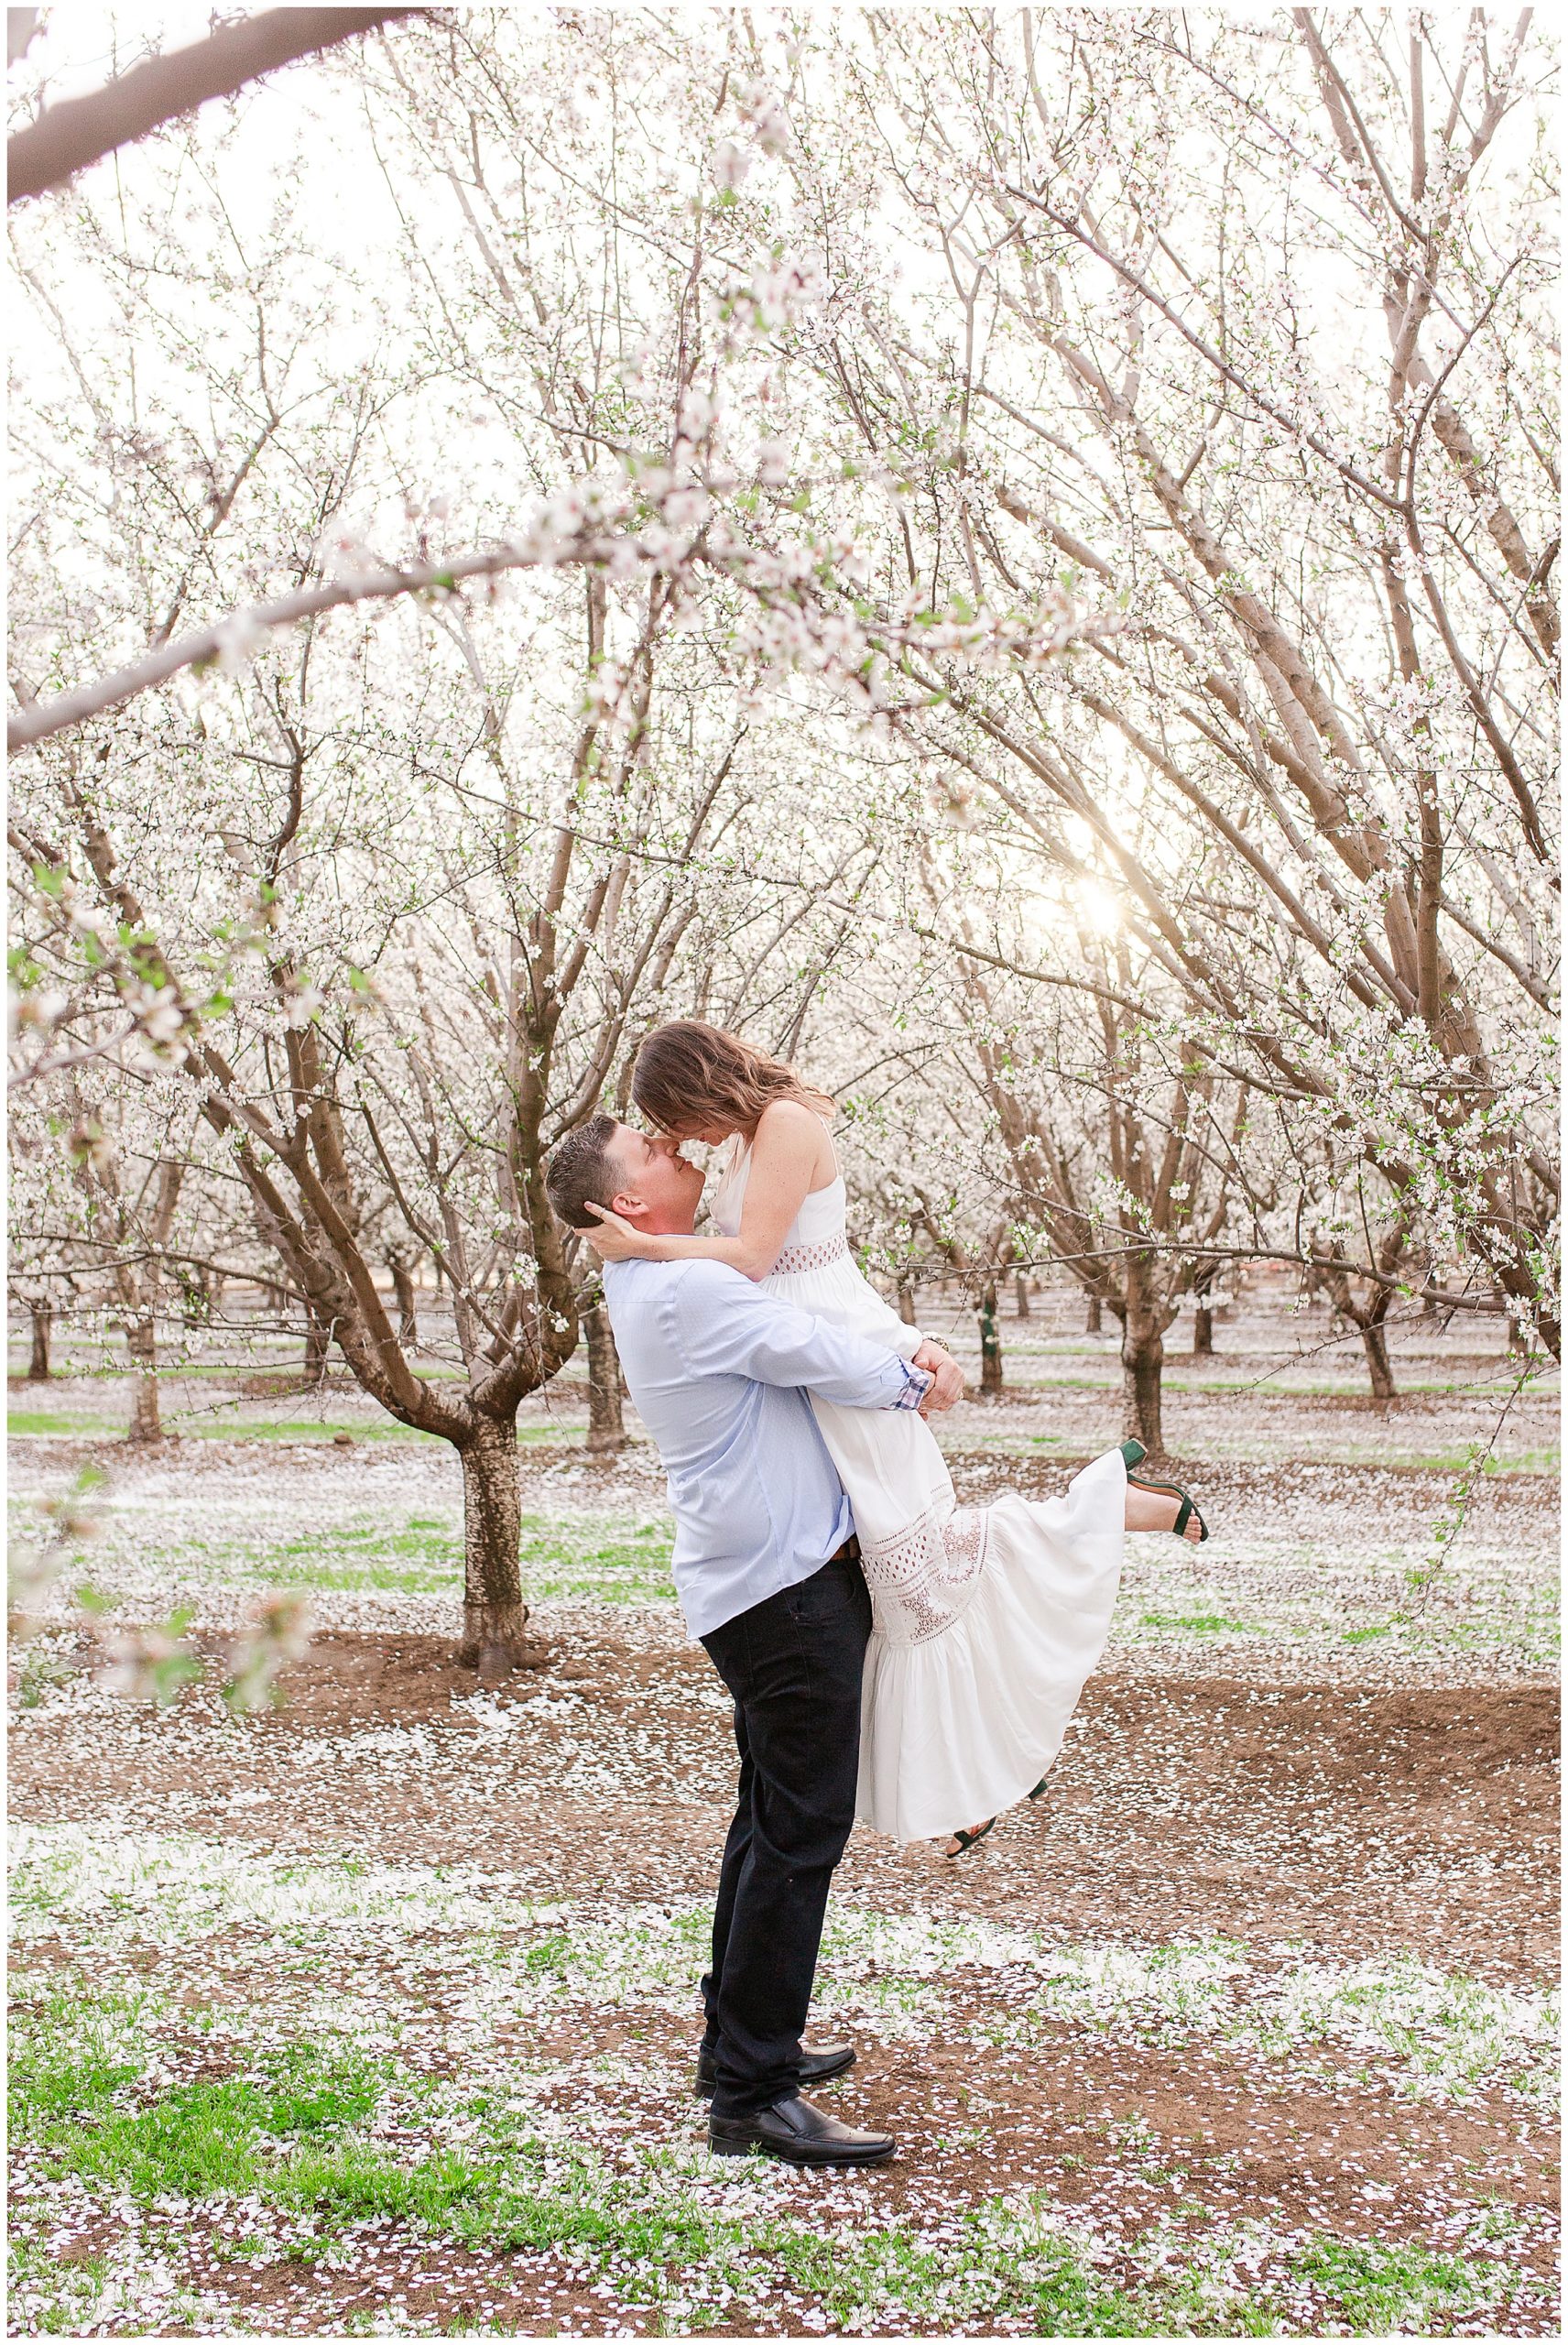 Lifting in the Almond Orchard | Sunshine + Darin